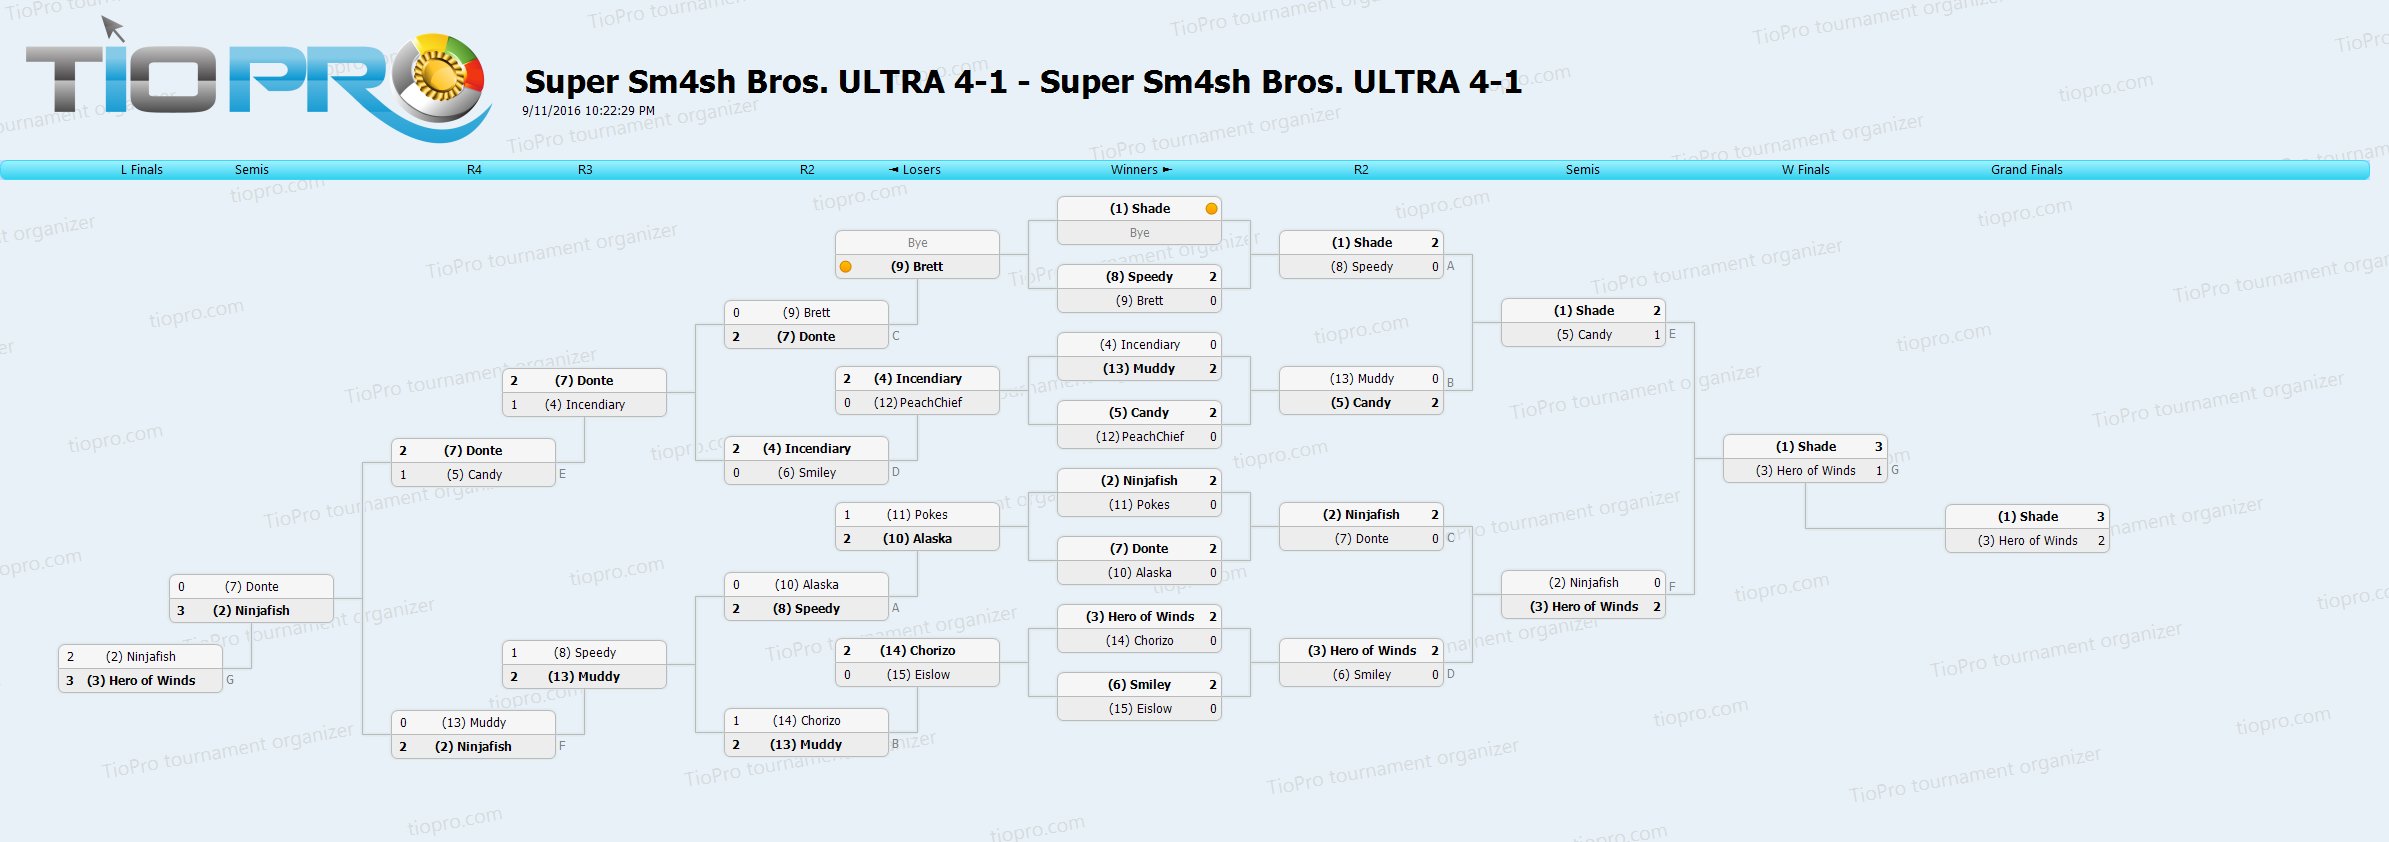 Super Sm4sh Bros. ULTRA 4-1